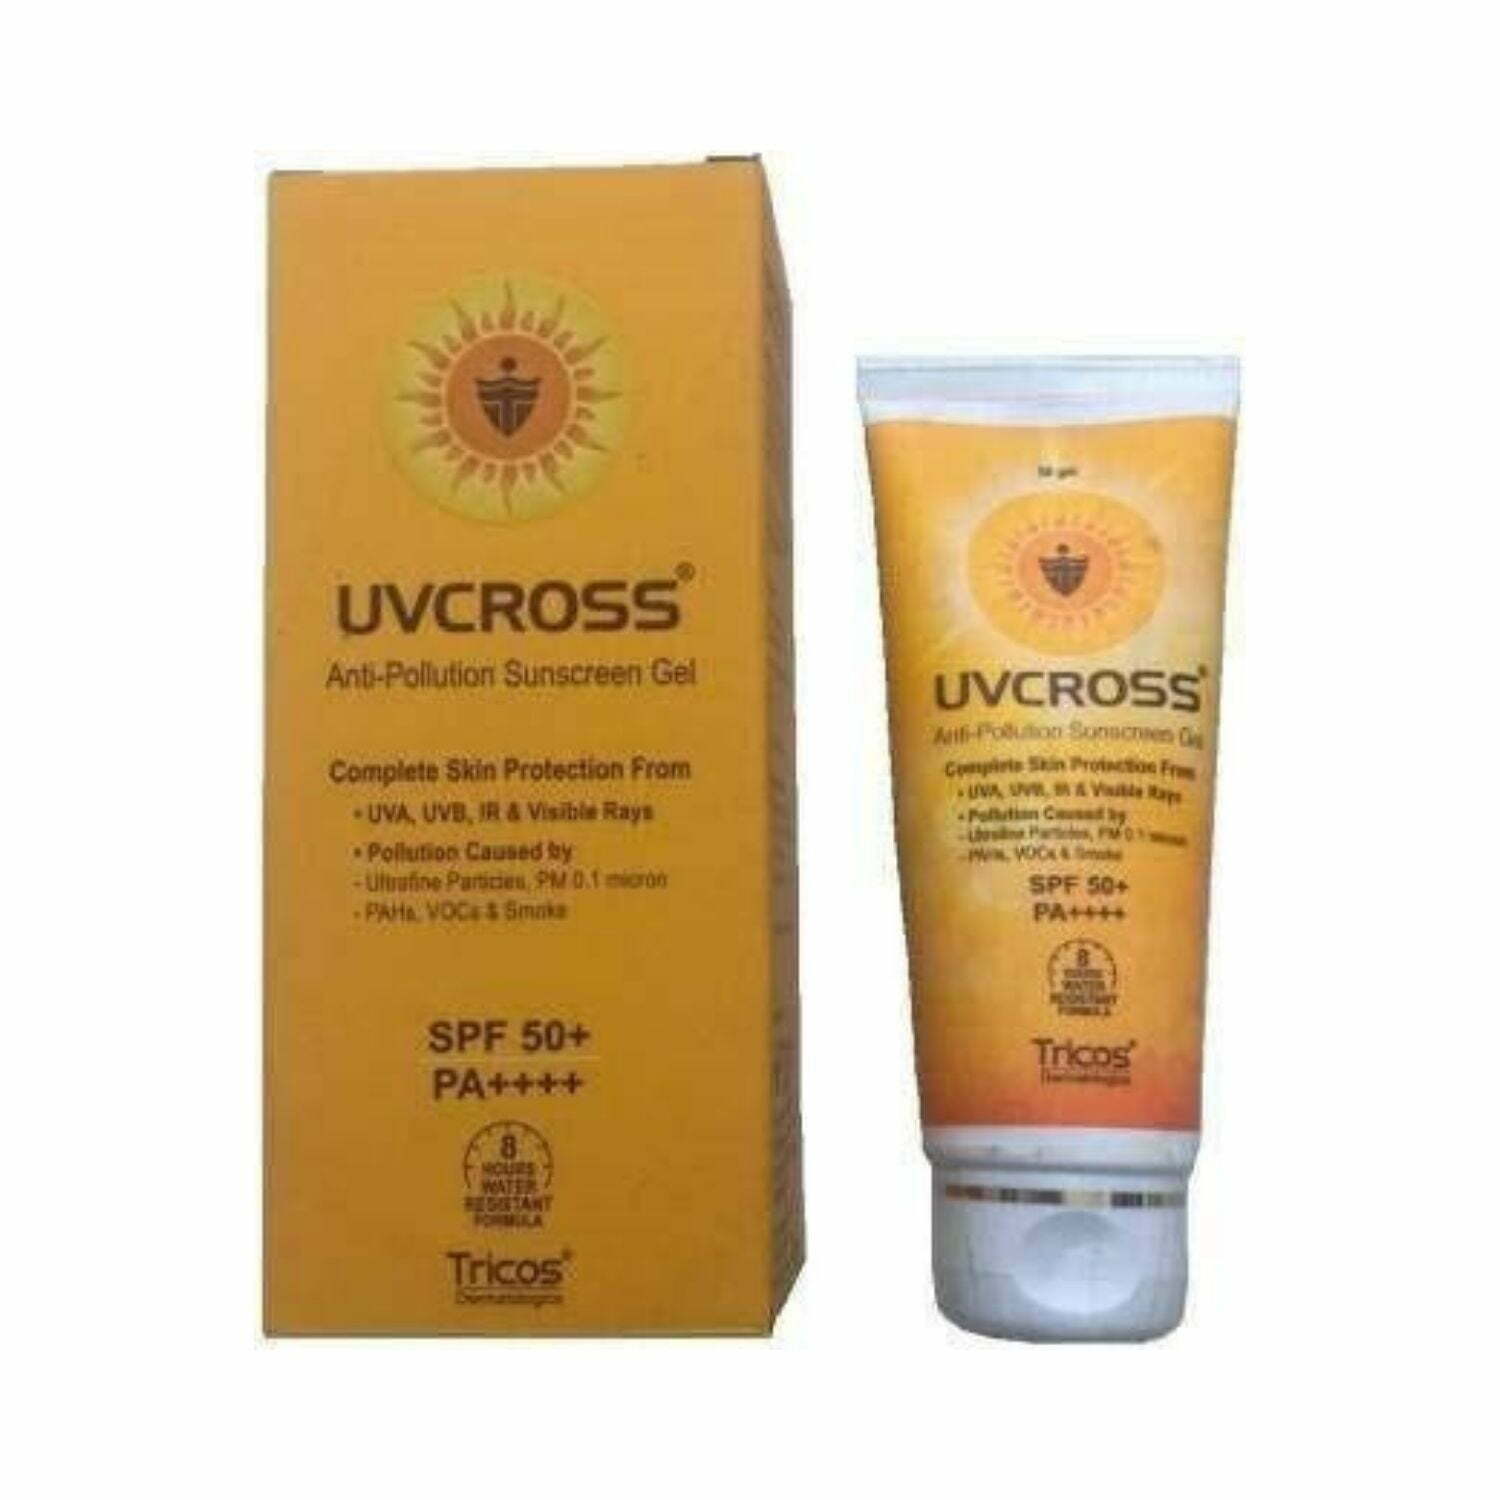 Uvcross Anti-pollution Sunscreen Gel